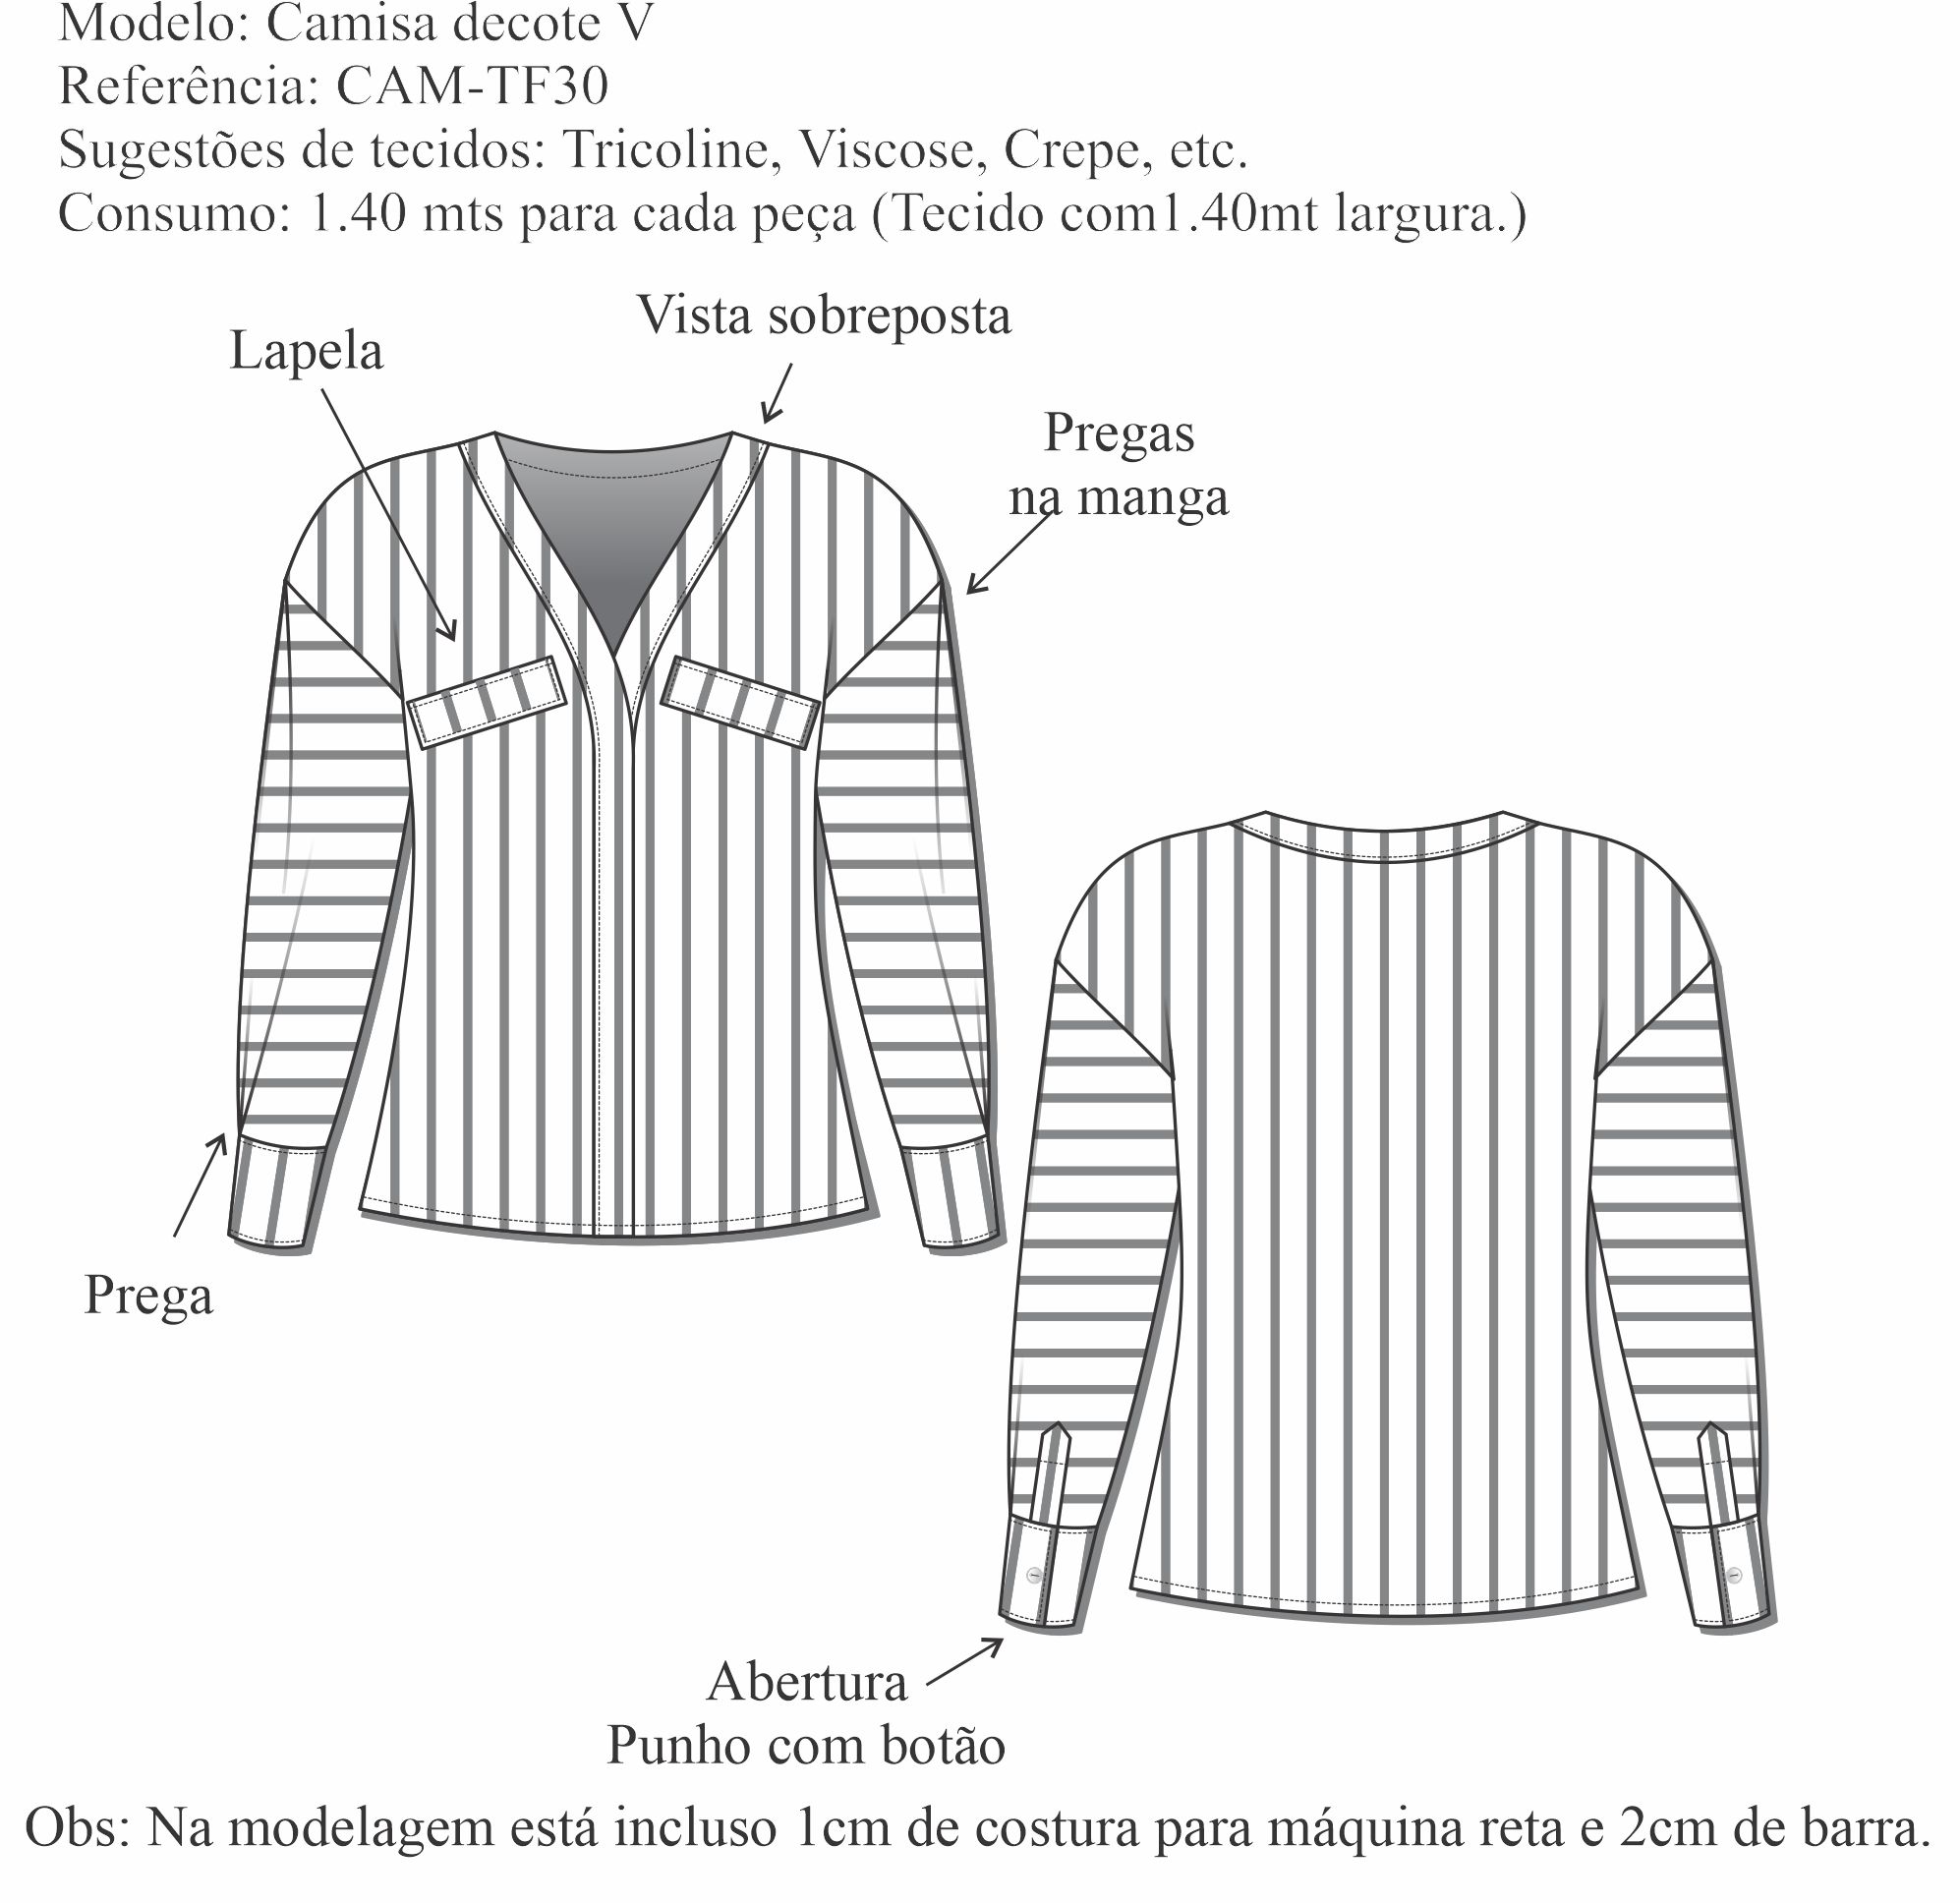 Camisa decote V (CAM-TF30) - Foto 1